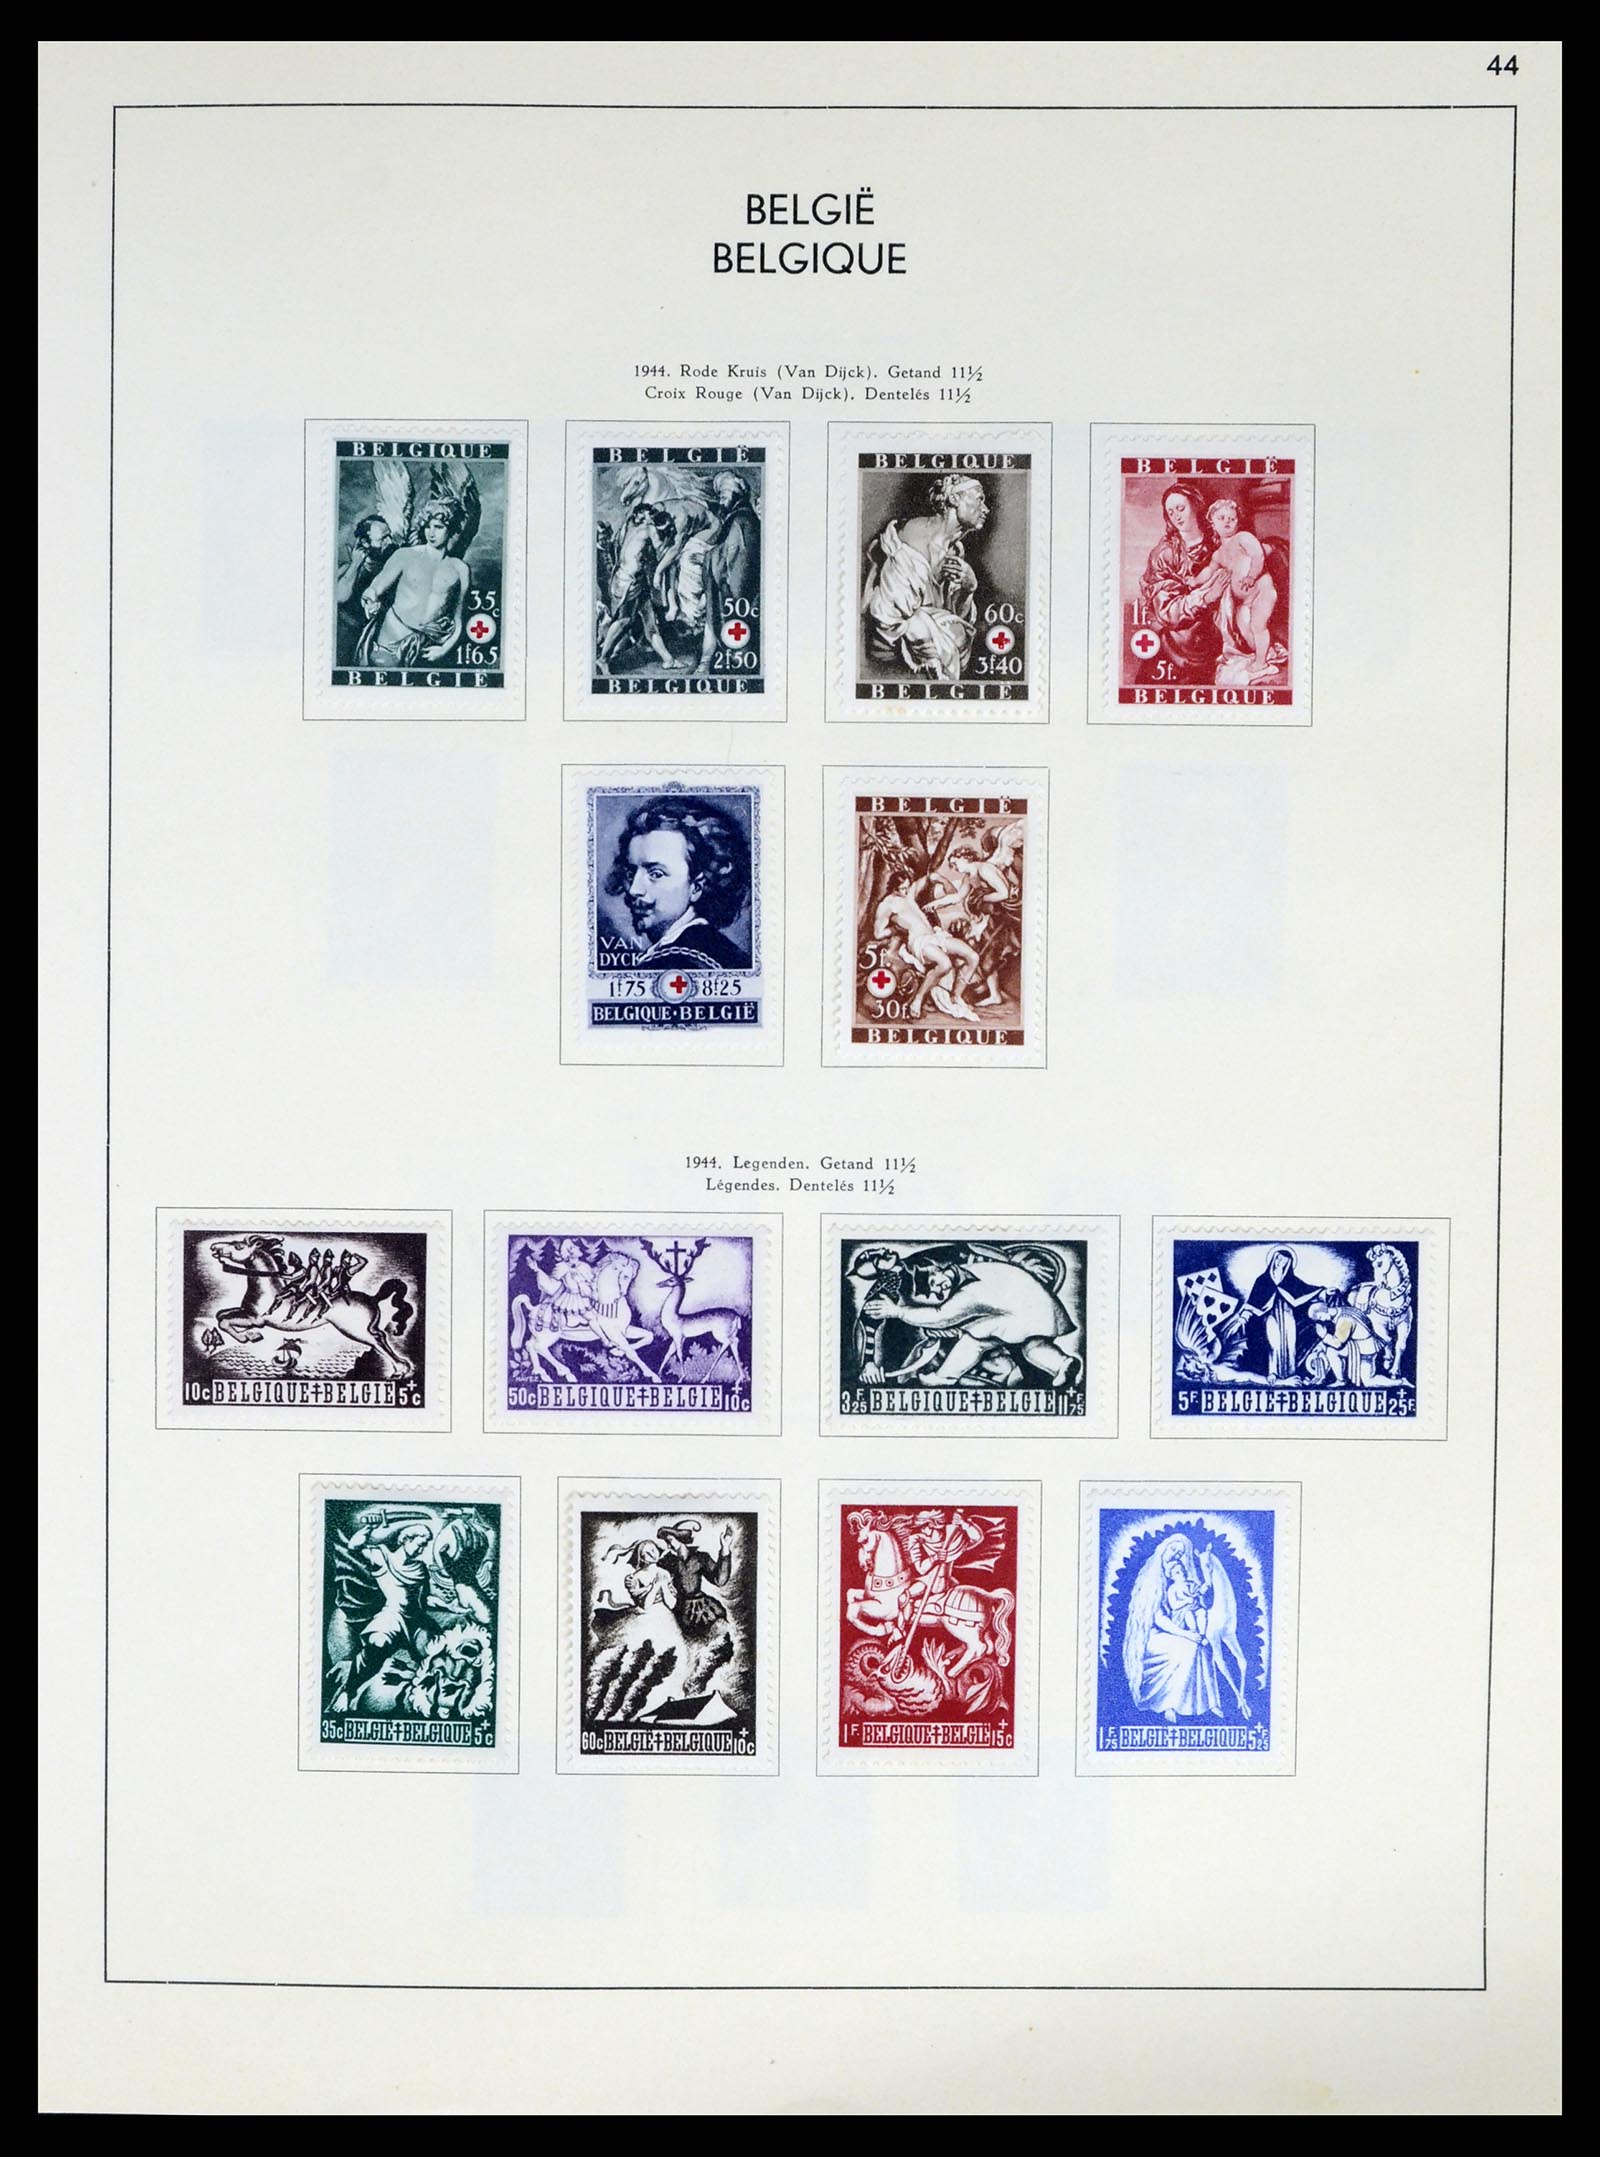 37959 062 - Stamp Collection 37959 Belgium and Belgian Congo 1849-1960.